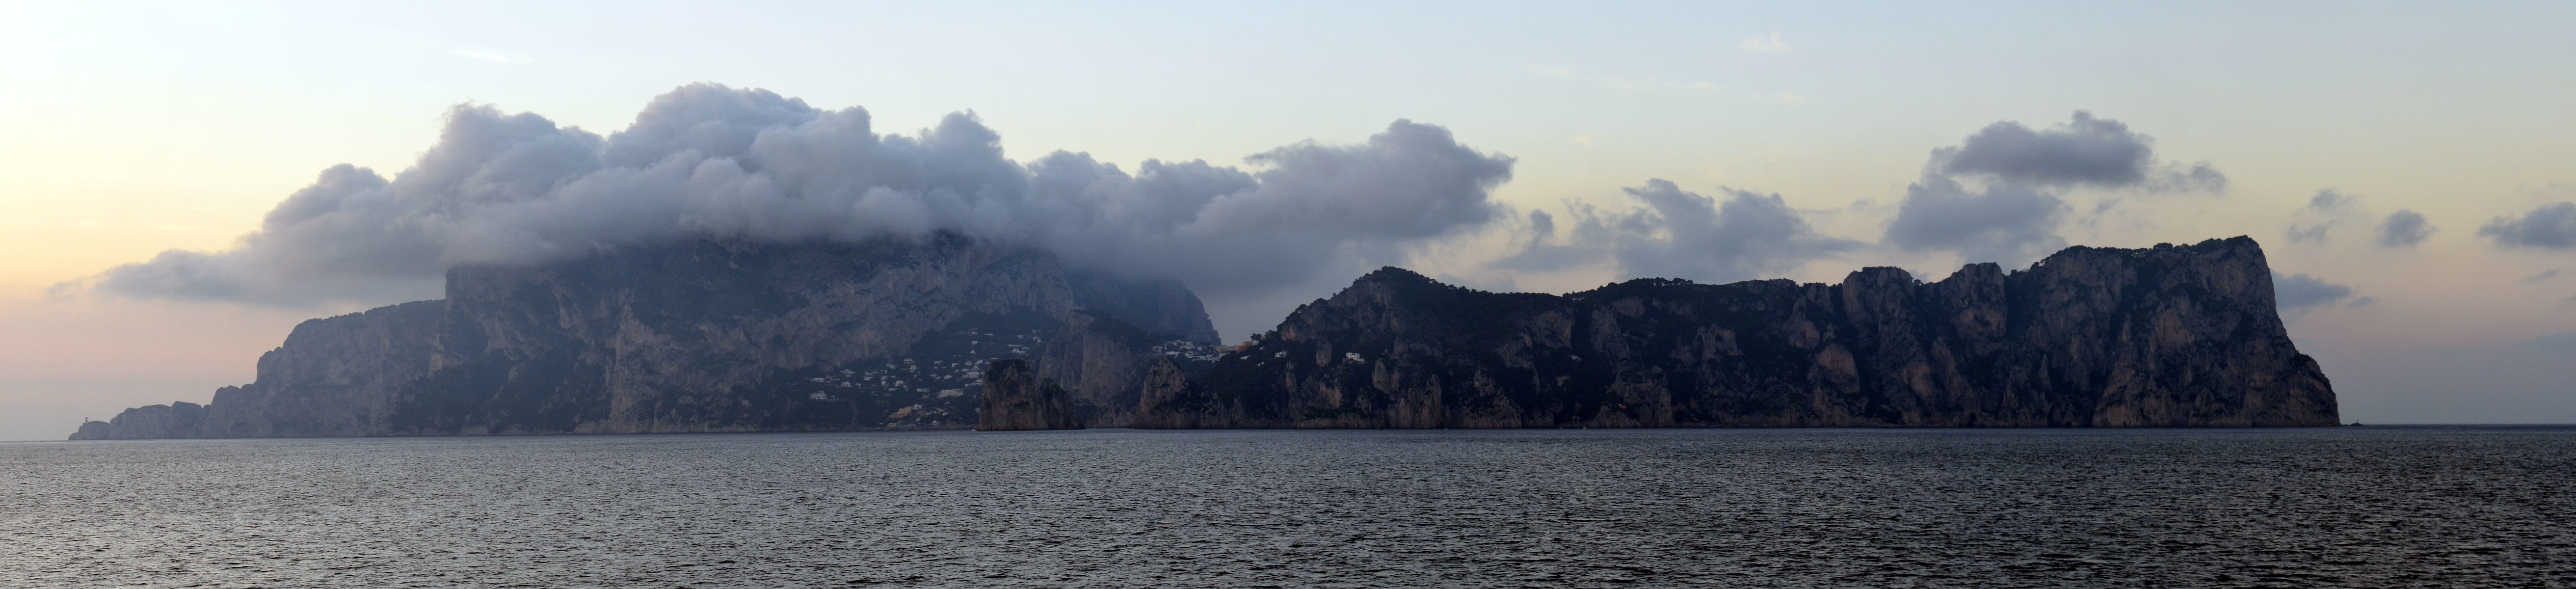 Capri island - Italy.jpg